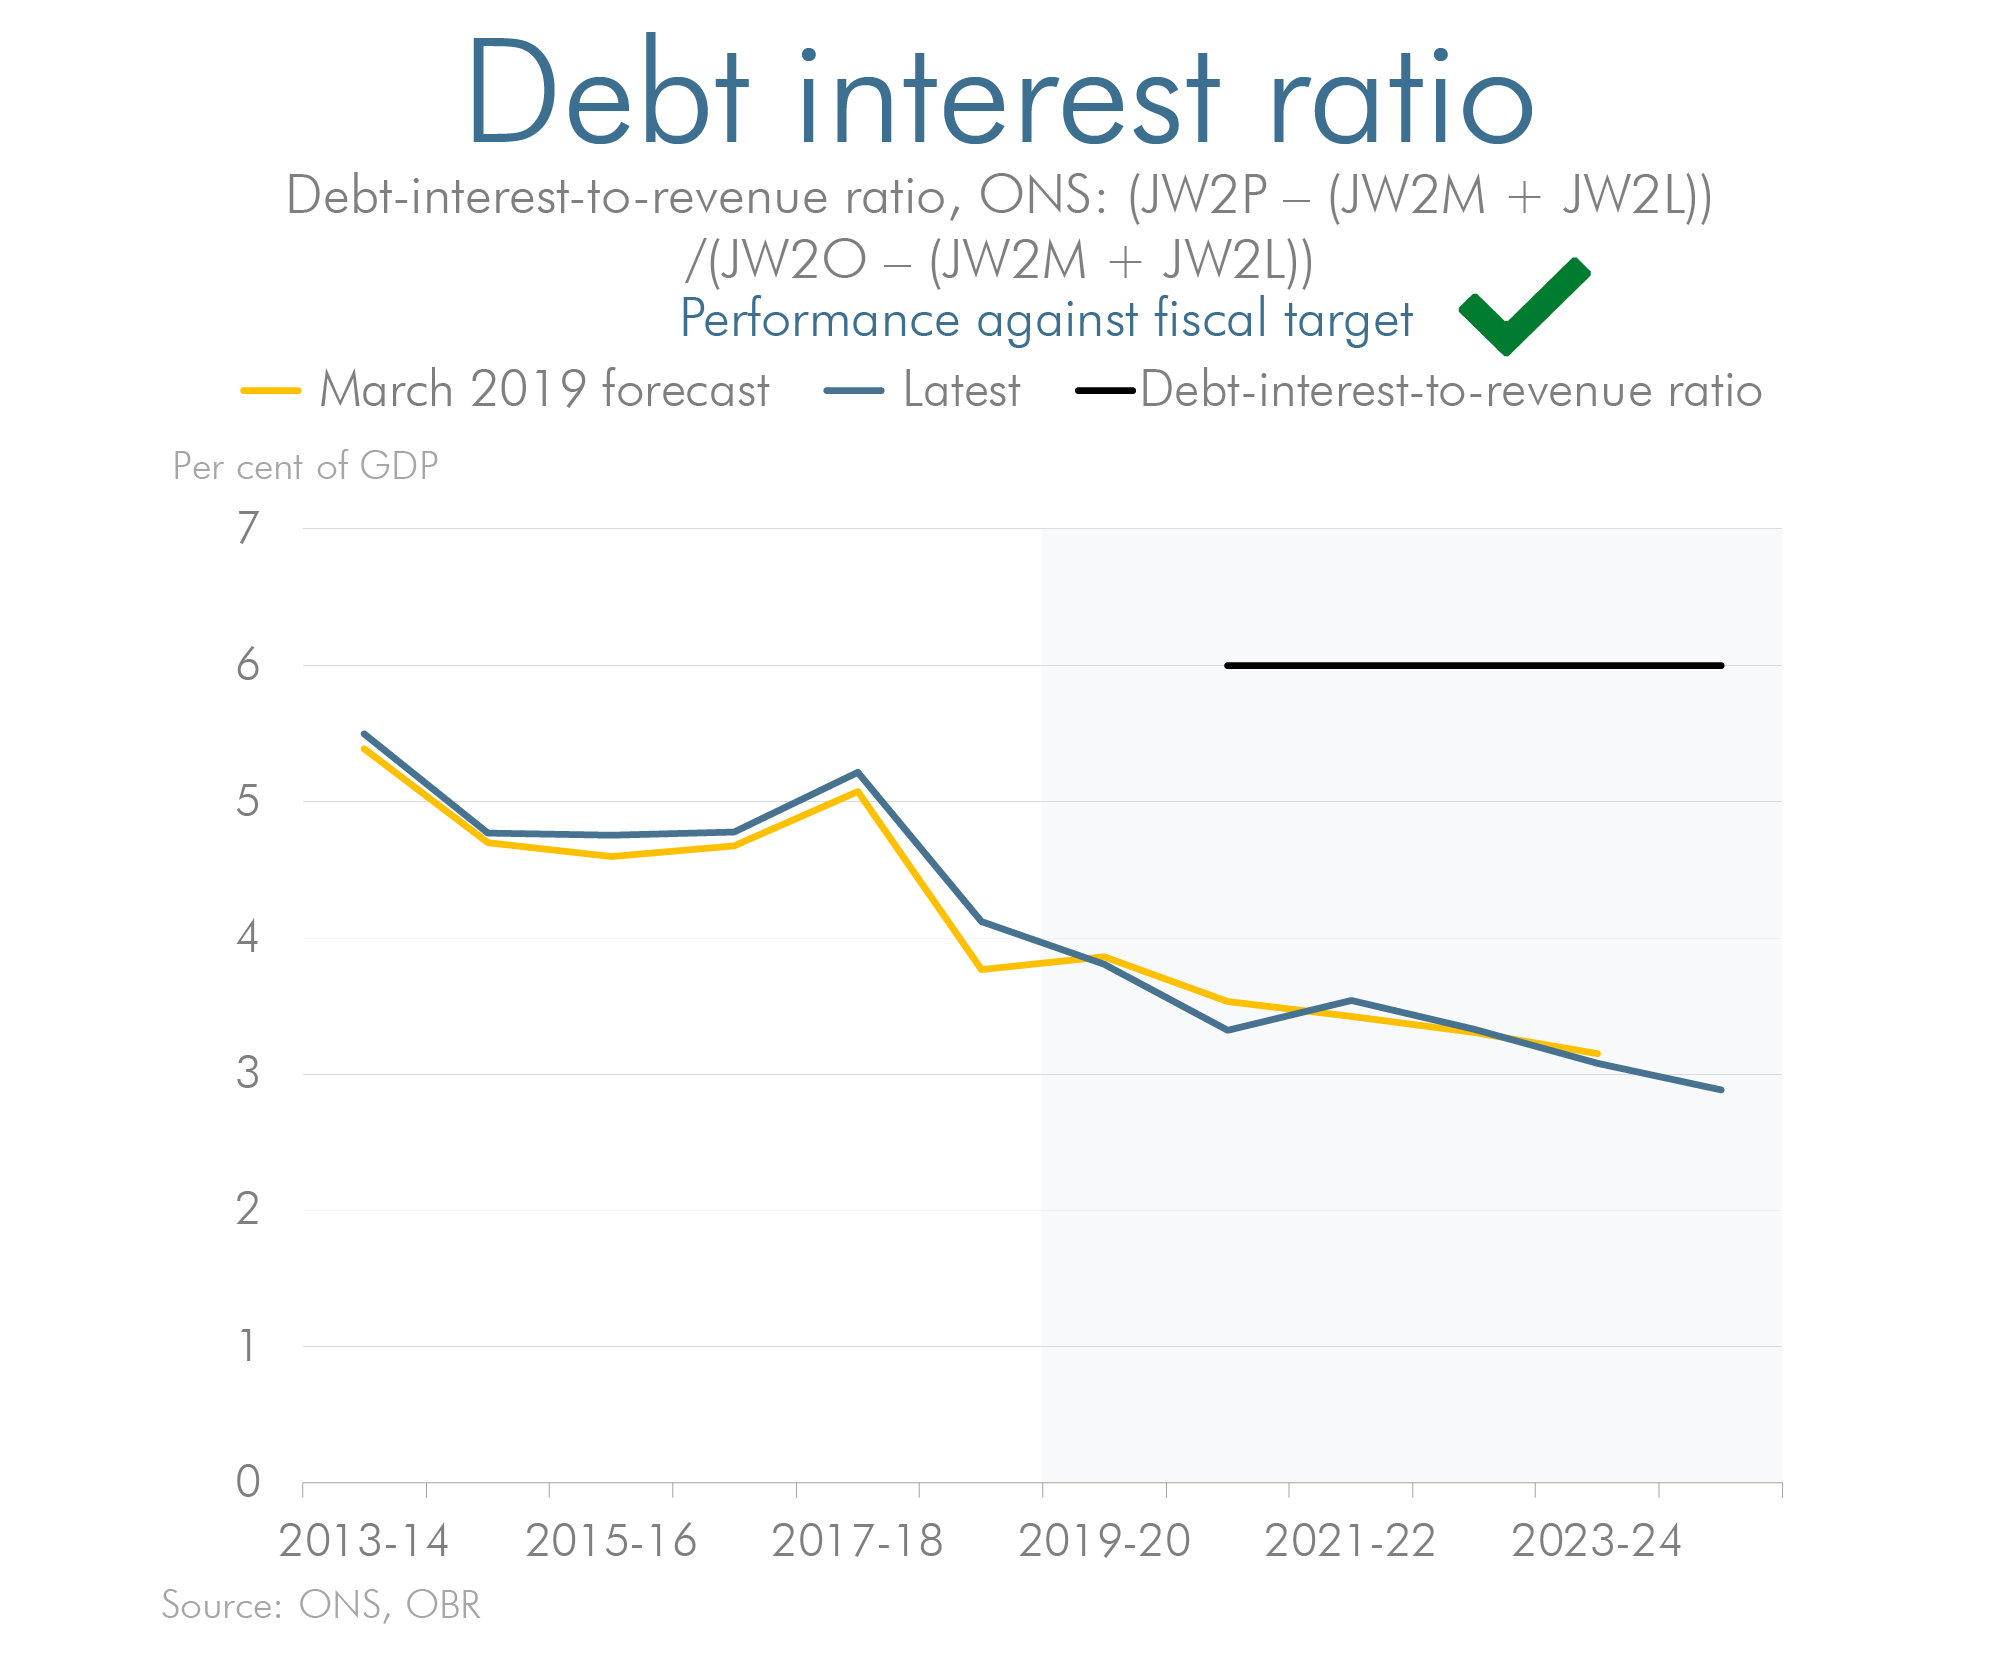 Latest forecast versus previous forecast for debt interest ratio